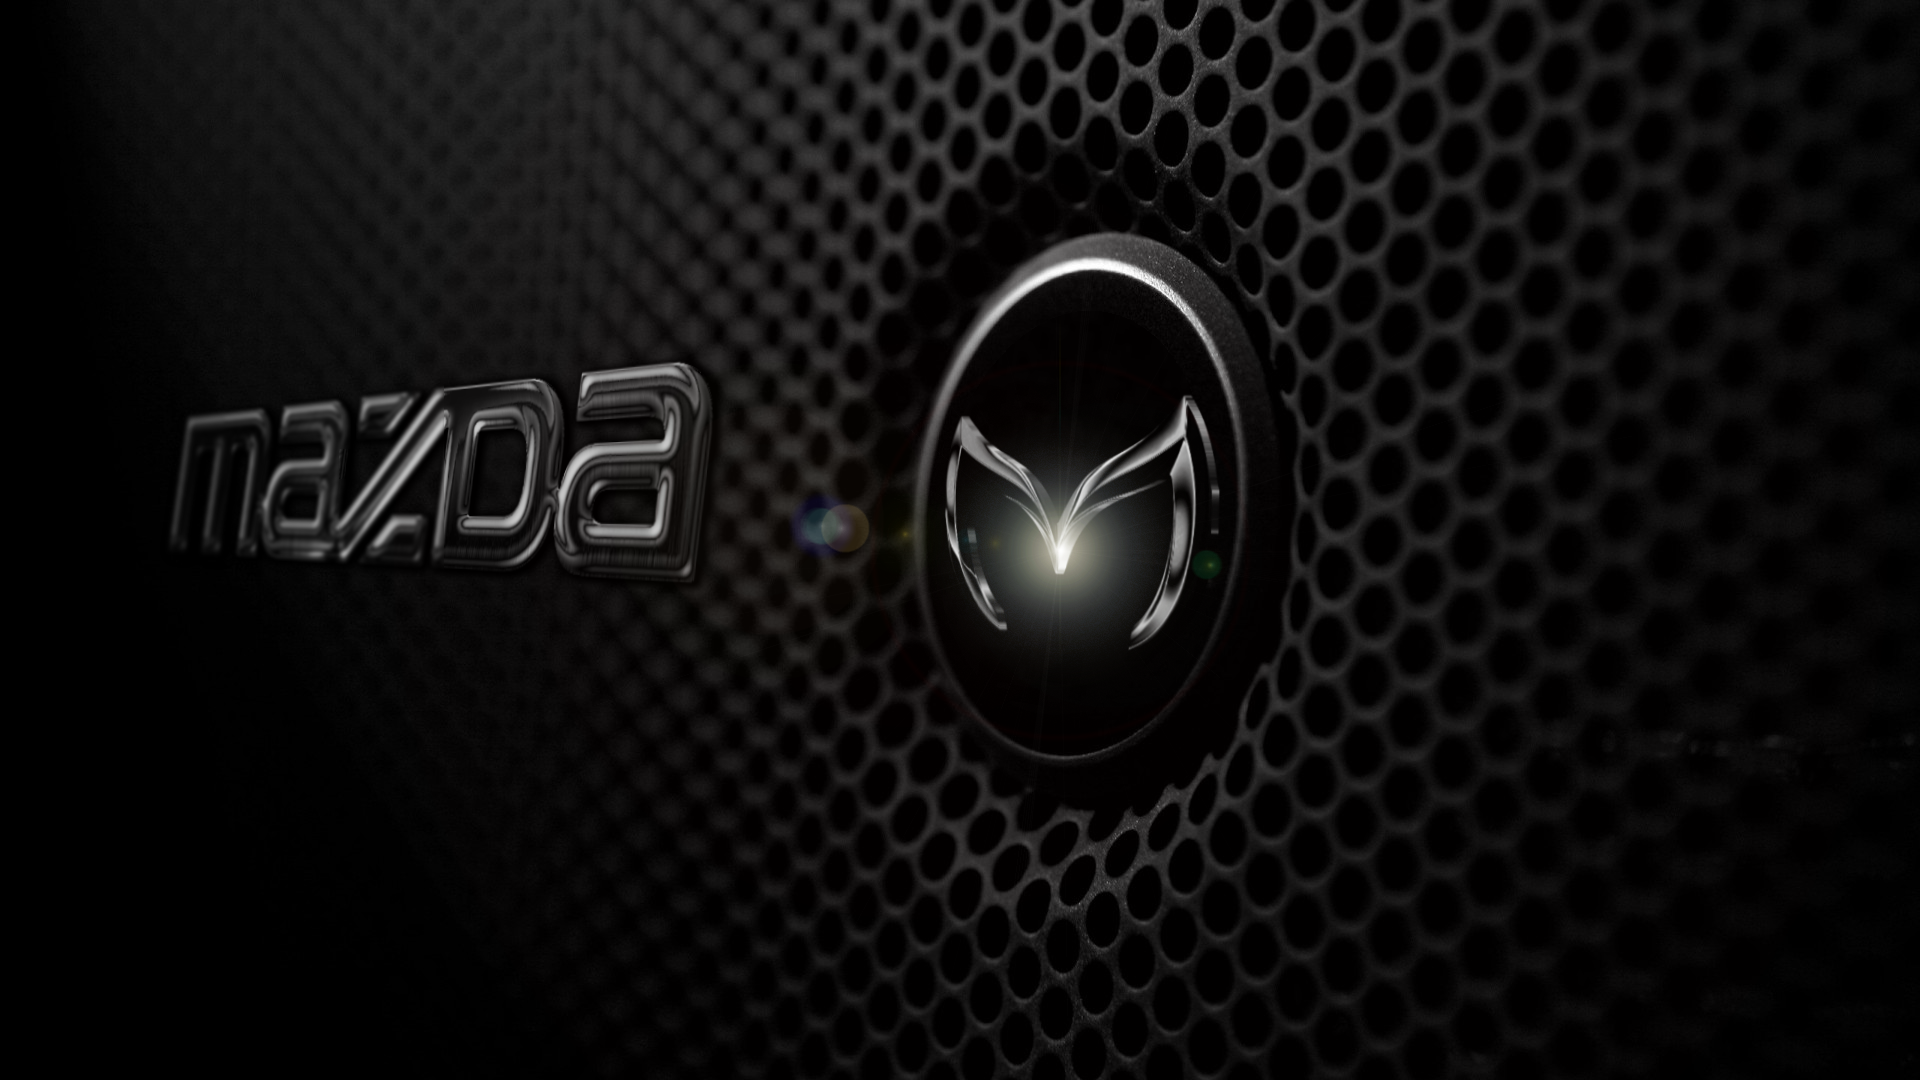 Mazda Logo Wallpaper Hd - image #37